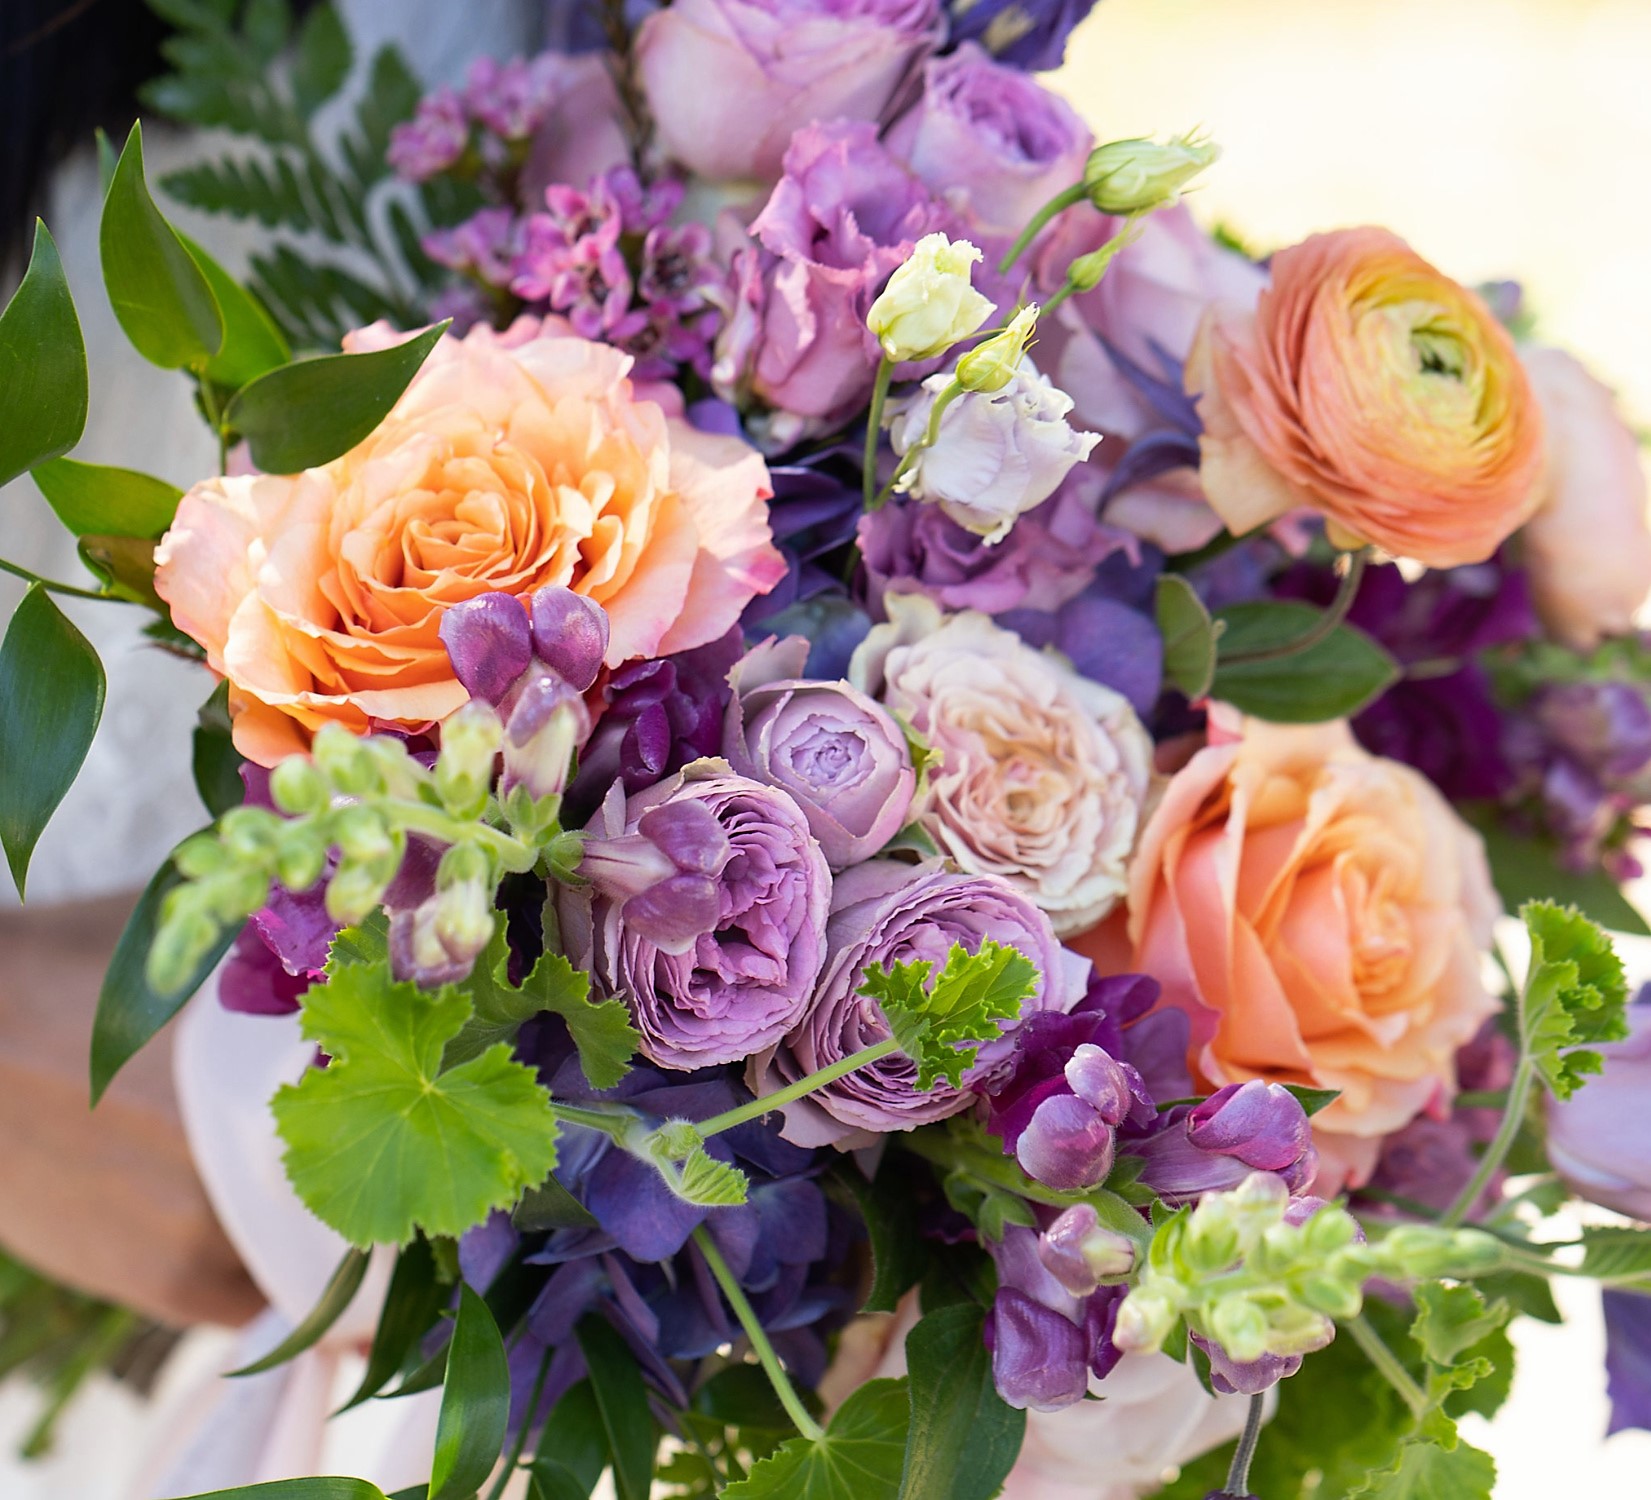 Wondrous Swirl Bridal Bouquet